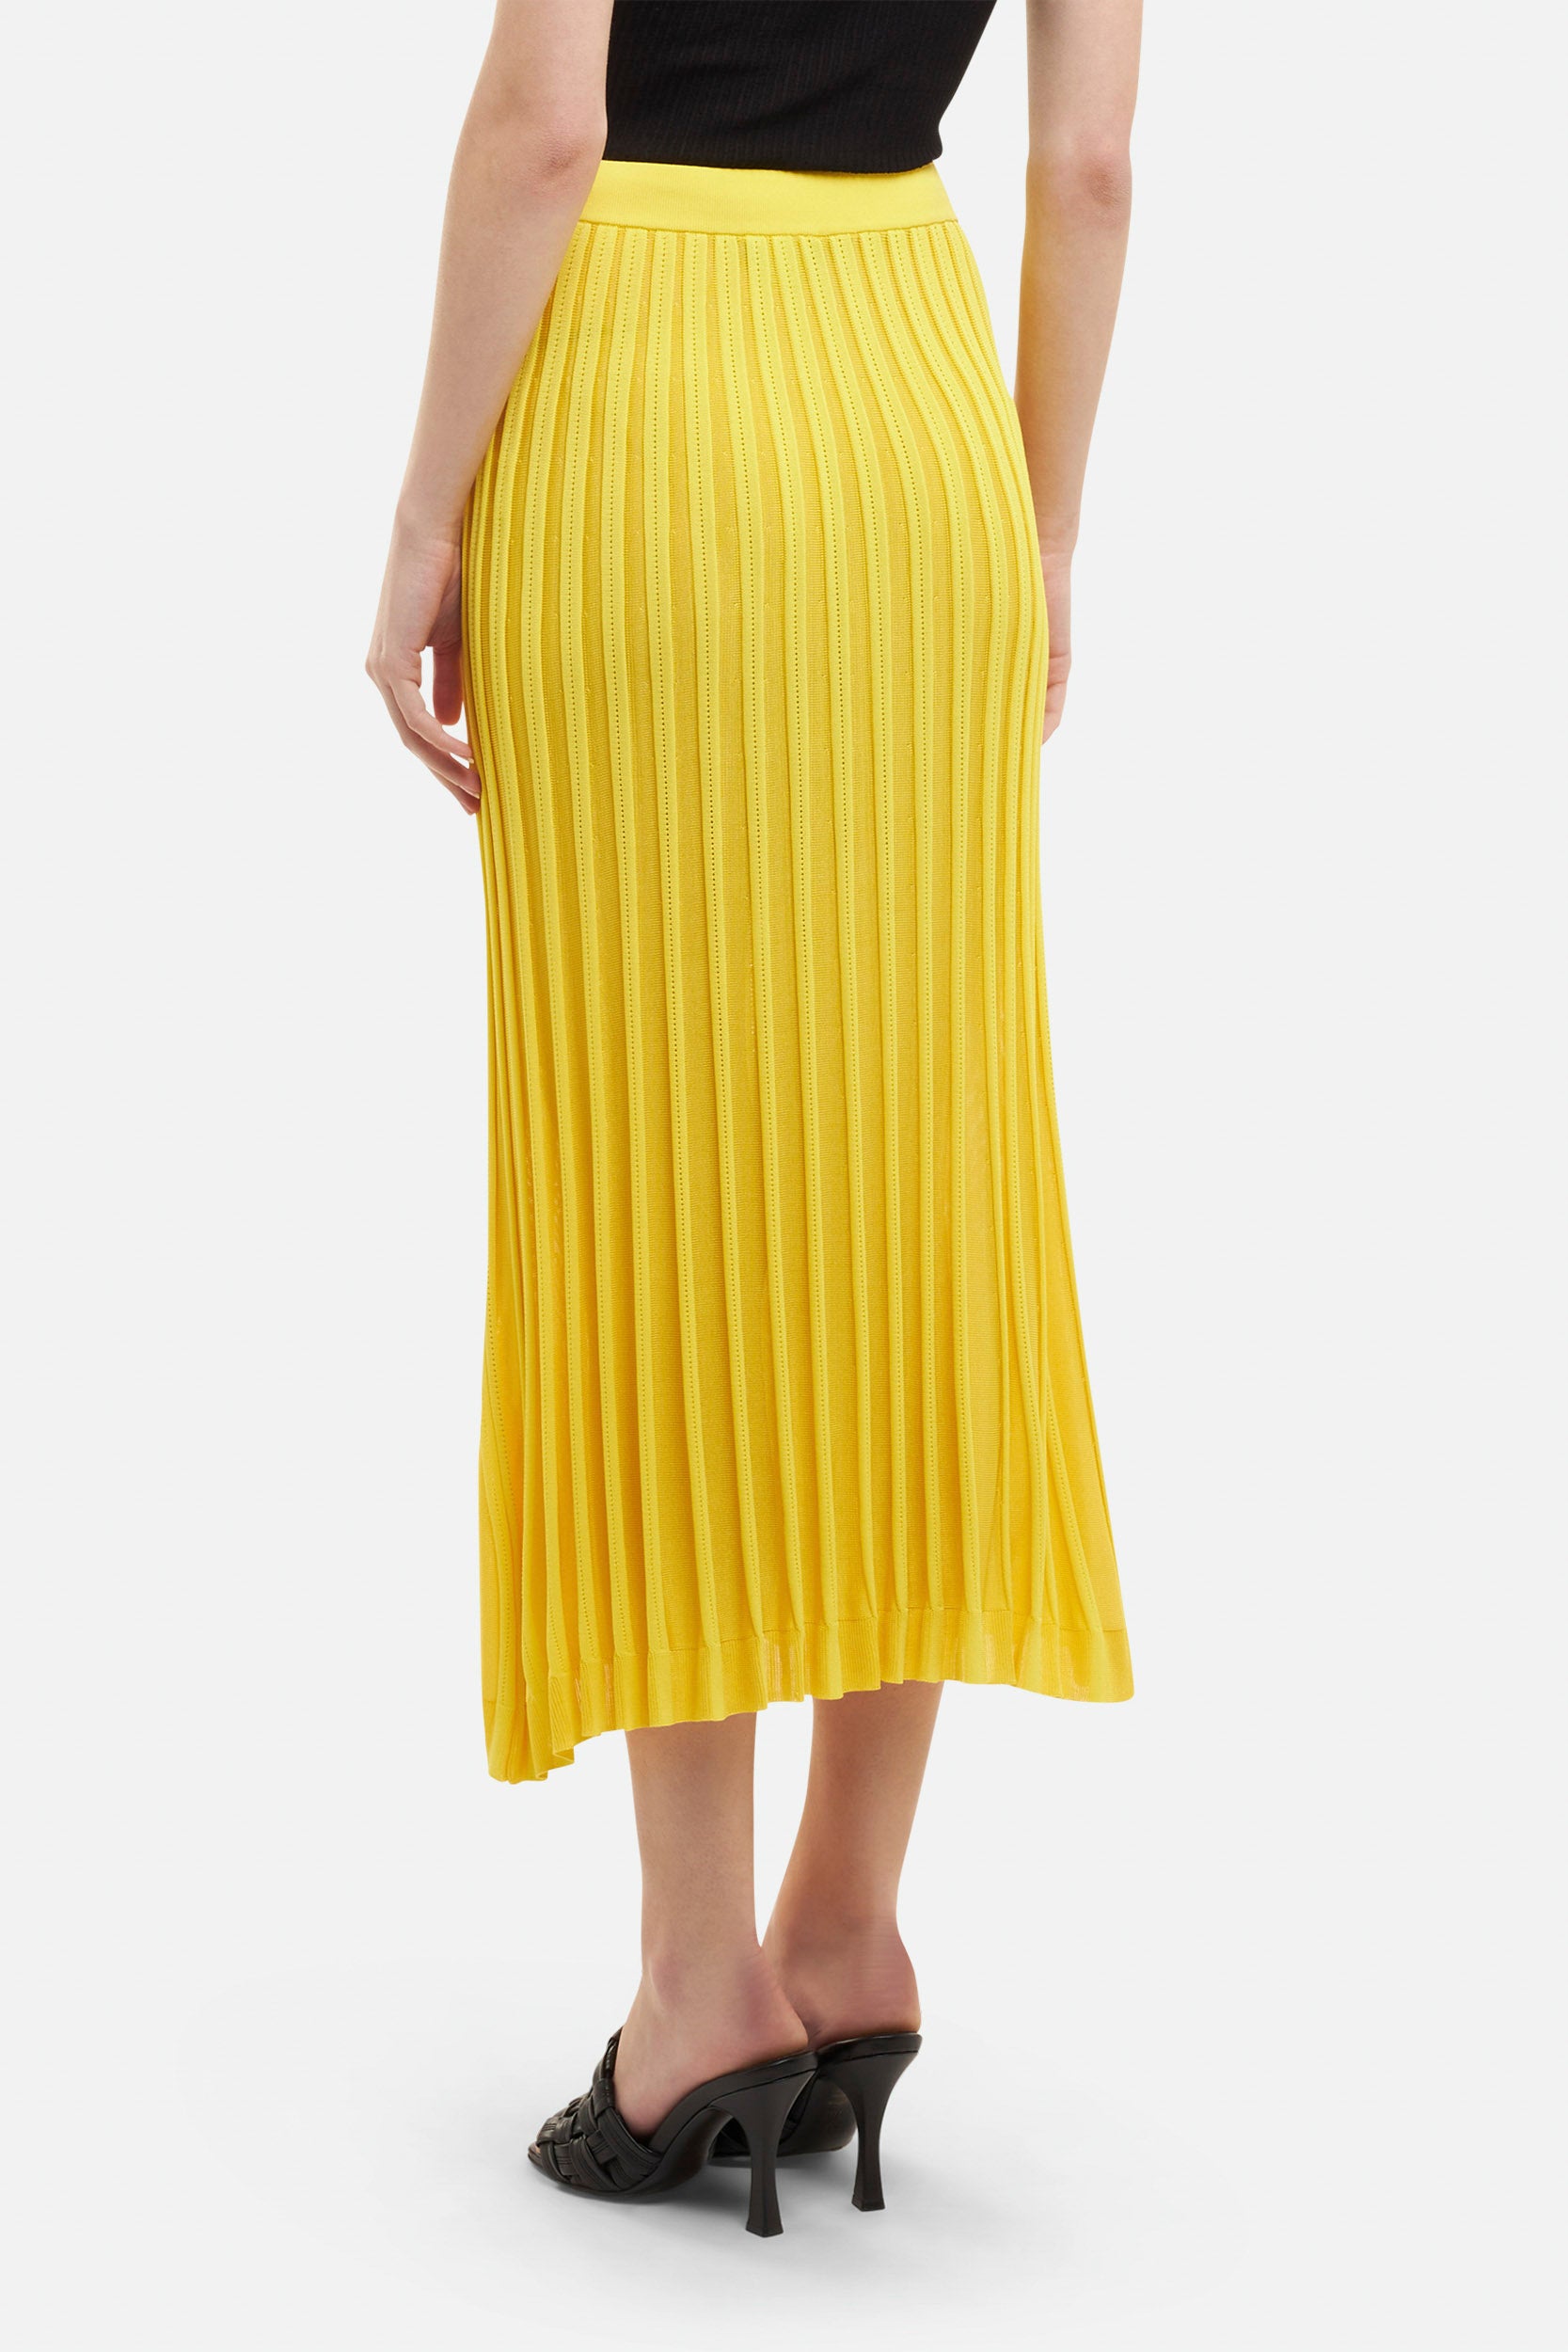 Elisabetta Franchi Yellow Skirt